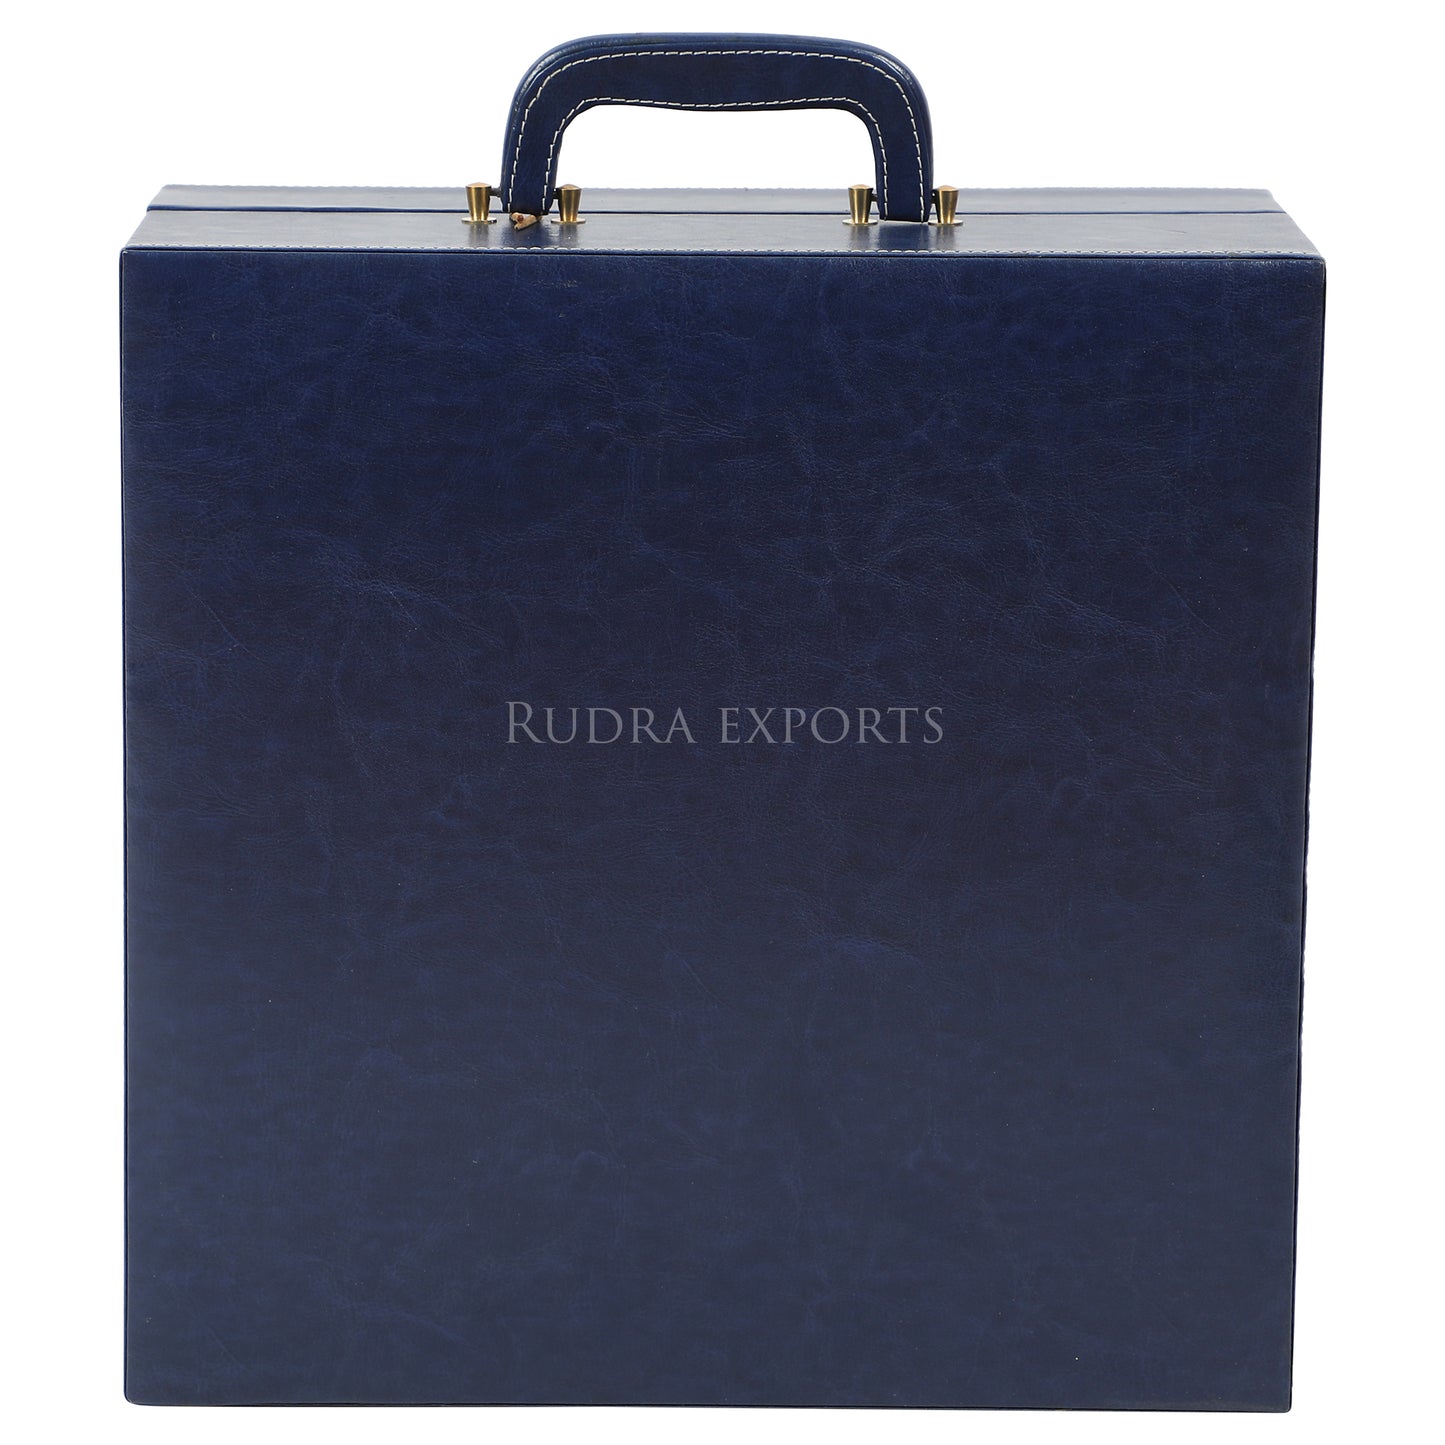 Rudra Exports Travel Bar Set | Portable Leatherette Bar Set | Whisky Case | Holds 01 Bottle & 04 Whisky Glasses (Blue)